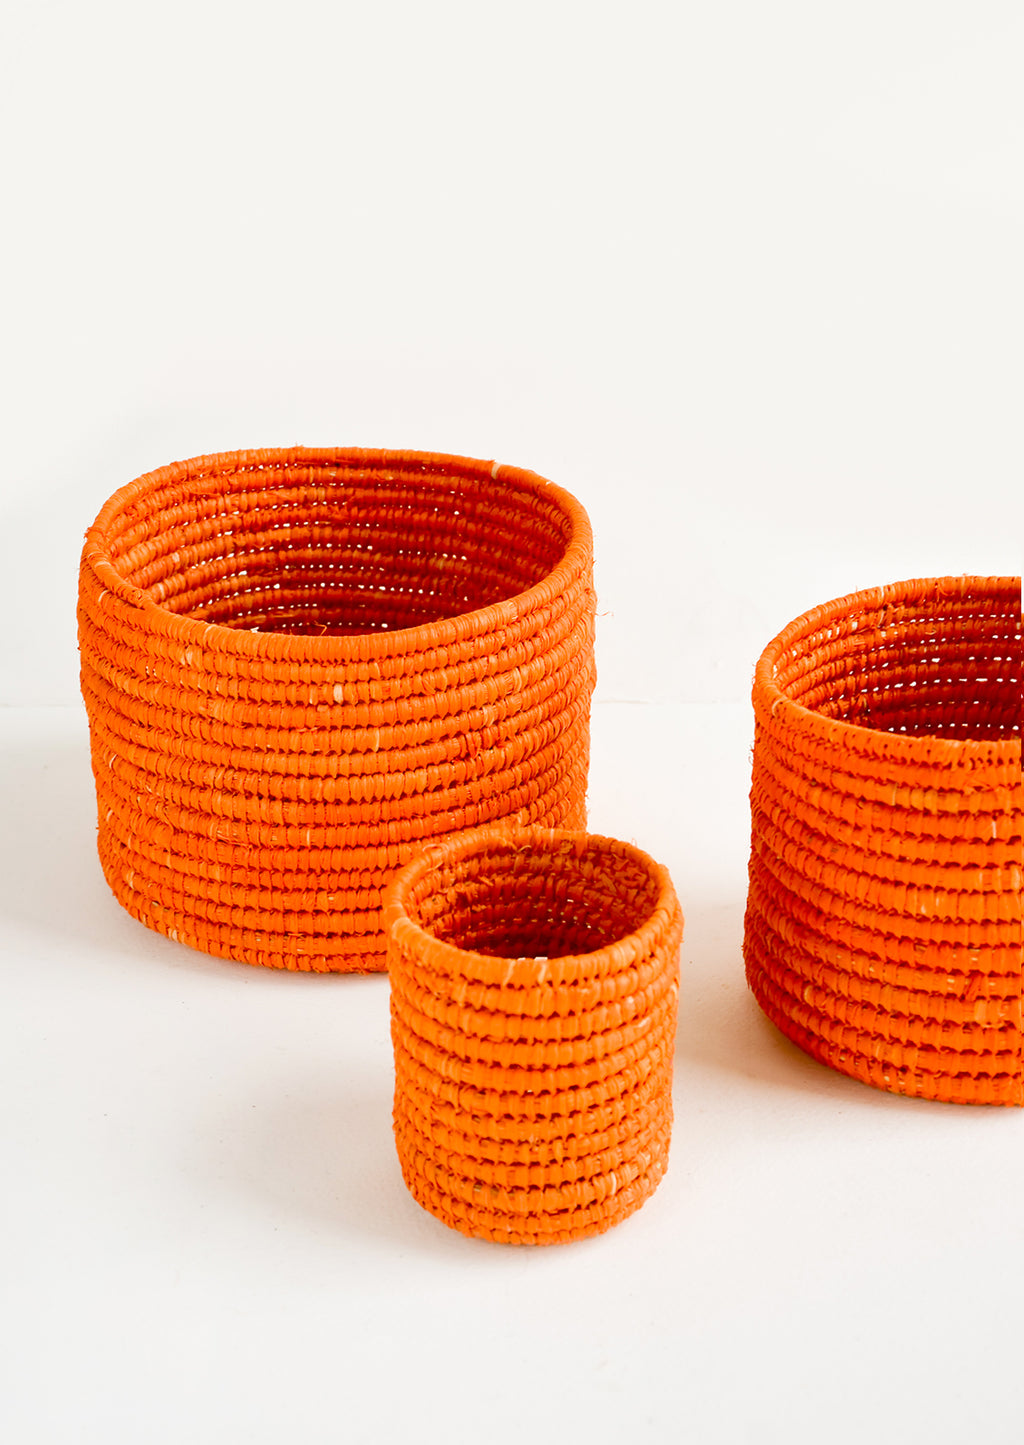 Extra Small / Orange: Set of round catchall baskets made from orange raffia in three incremental sizes.